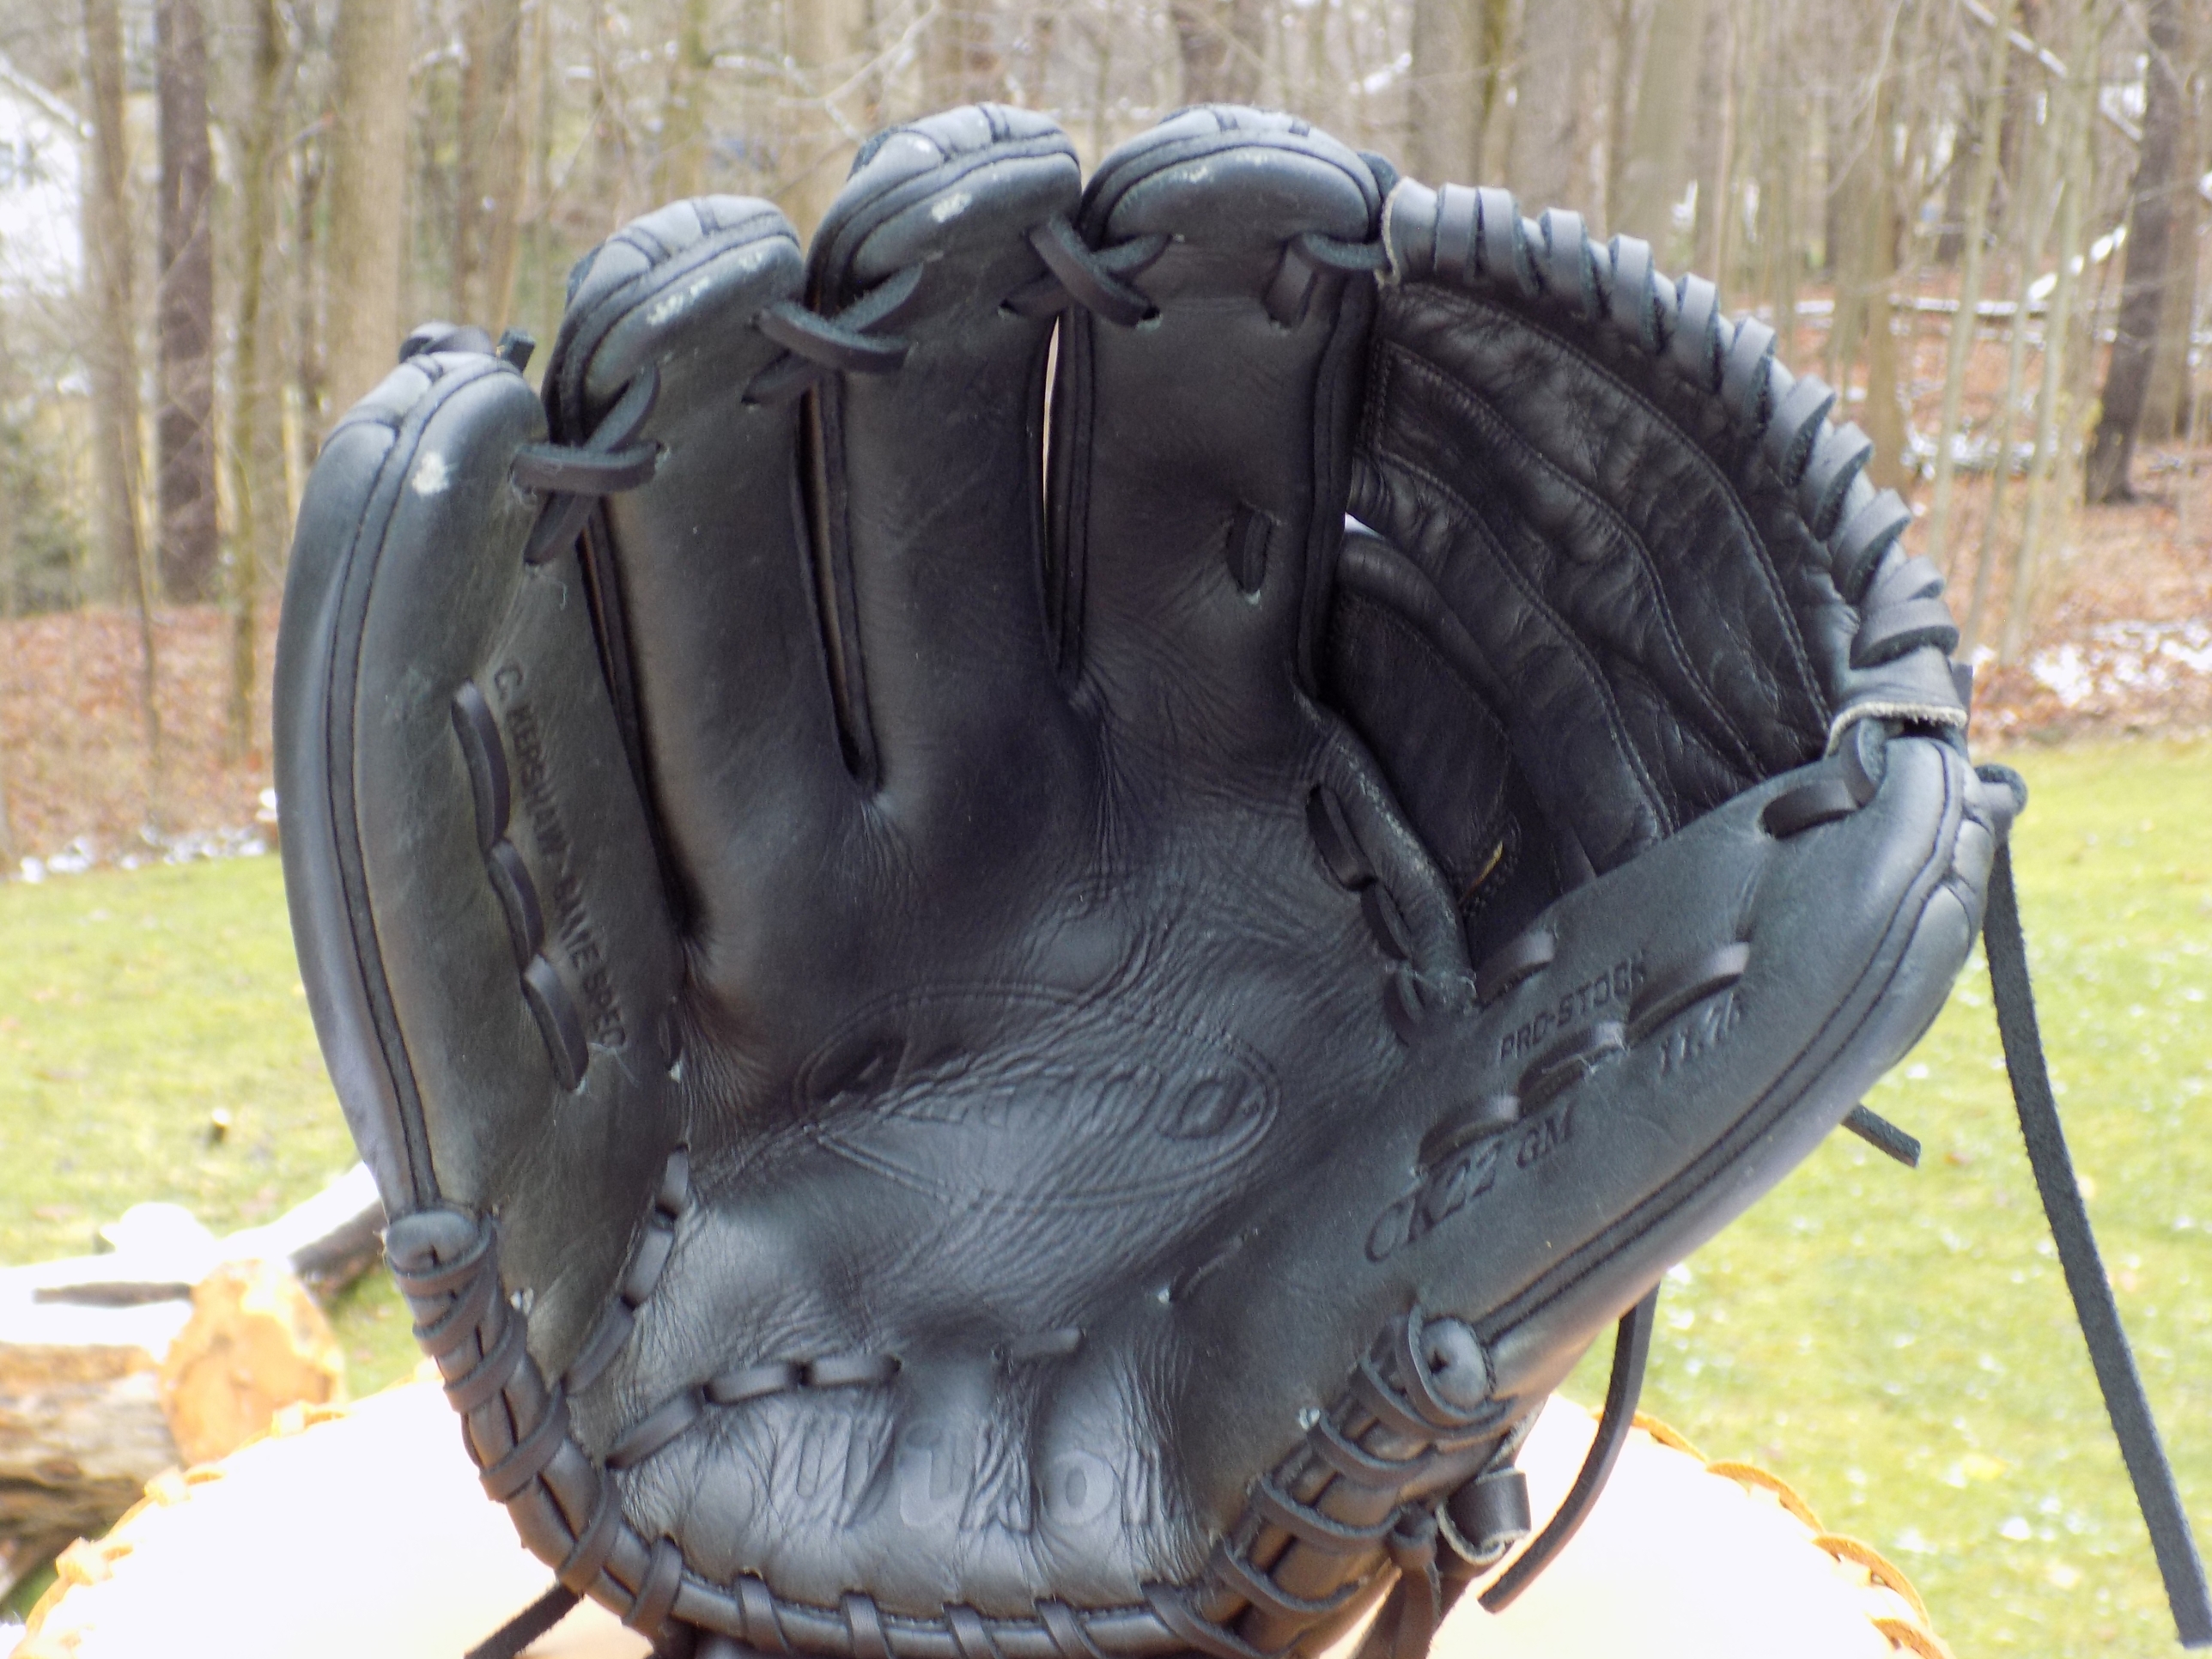 Used Wilson Pitcher's Left Hand Throw A2000 Baseball Glove 11.75"